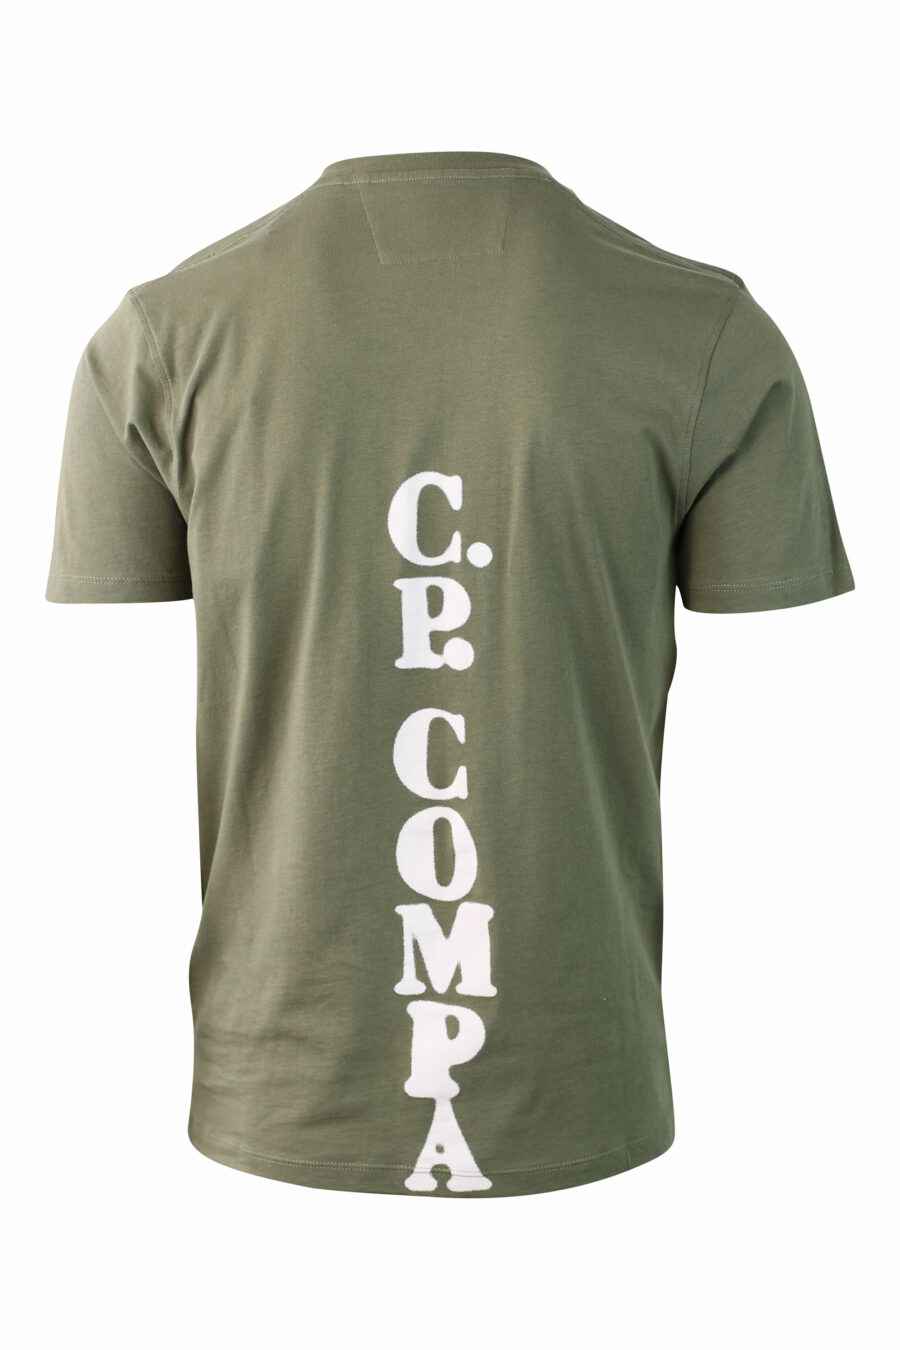 Camiseta verde militar con minilogo vertical - IMG 0064 1